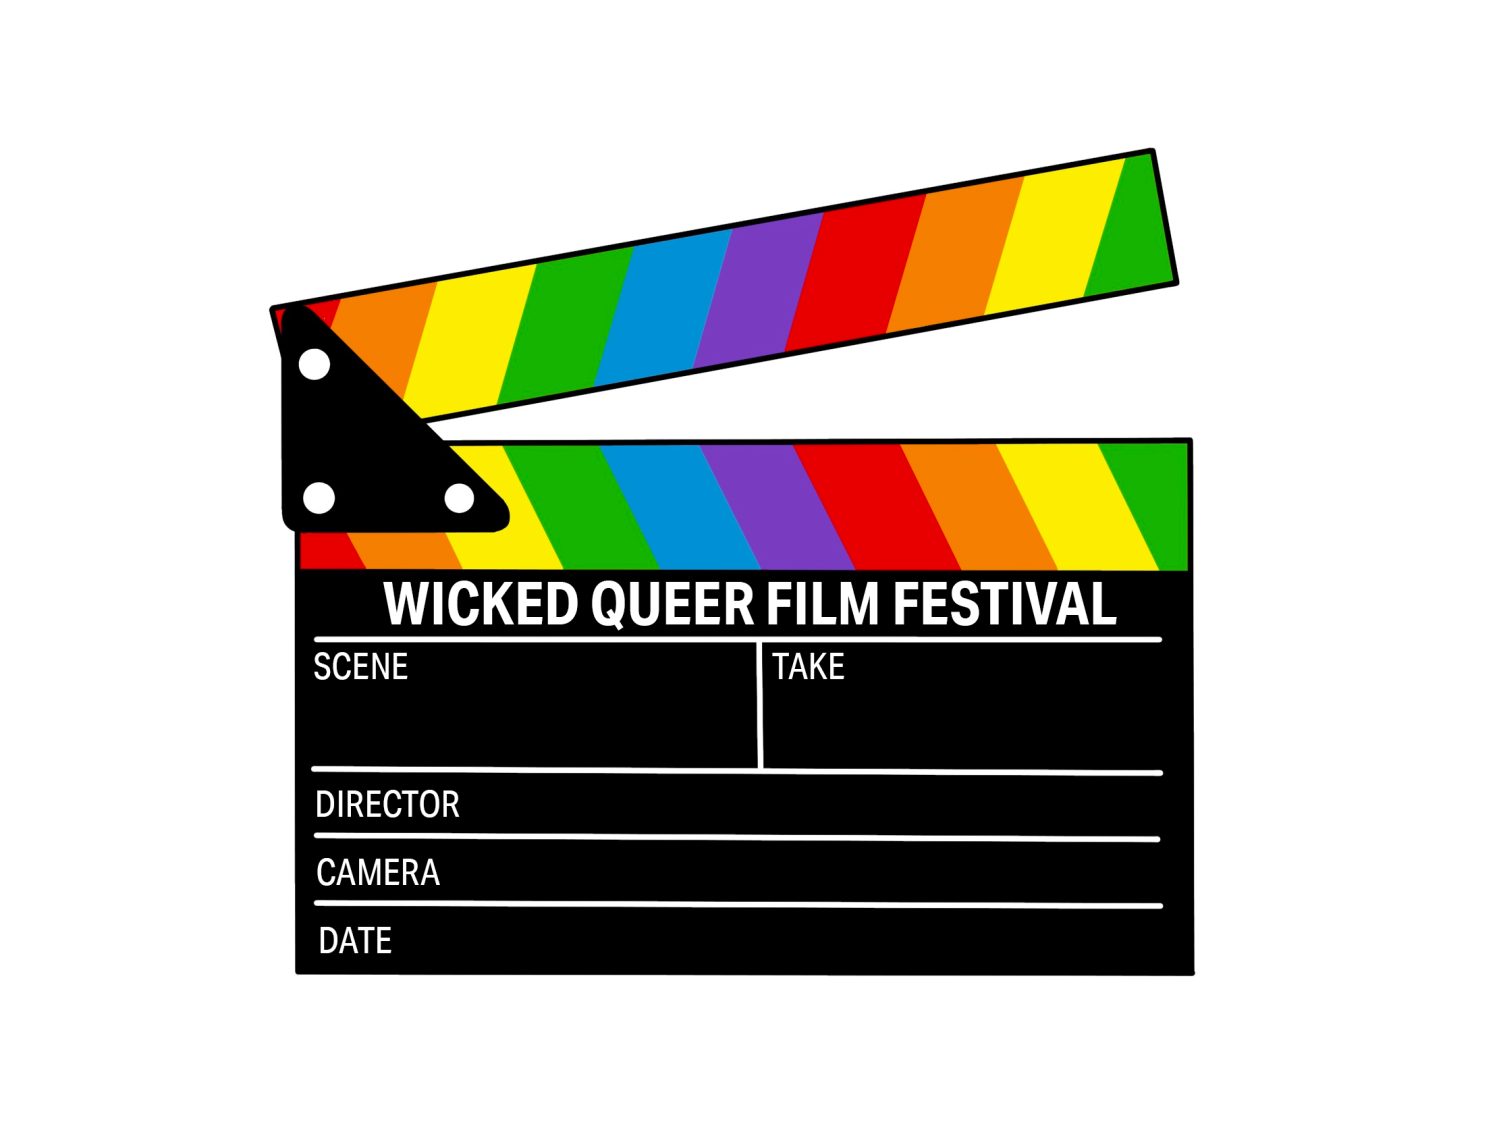 Boston’s Wicked Queer Film Festival brings LGBTQ+ representation to